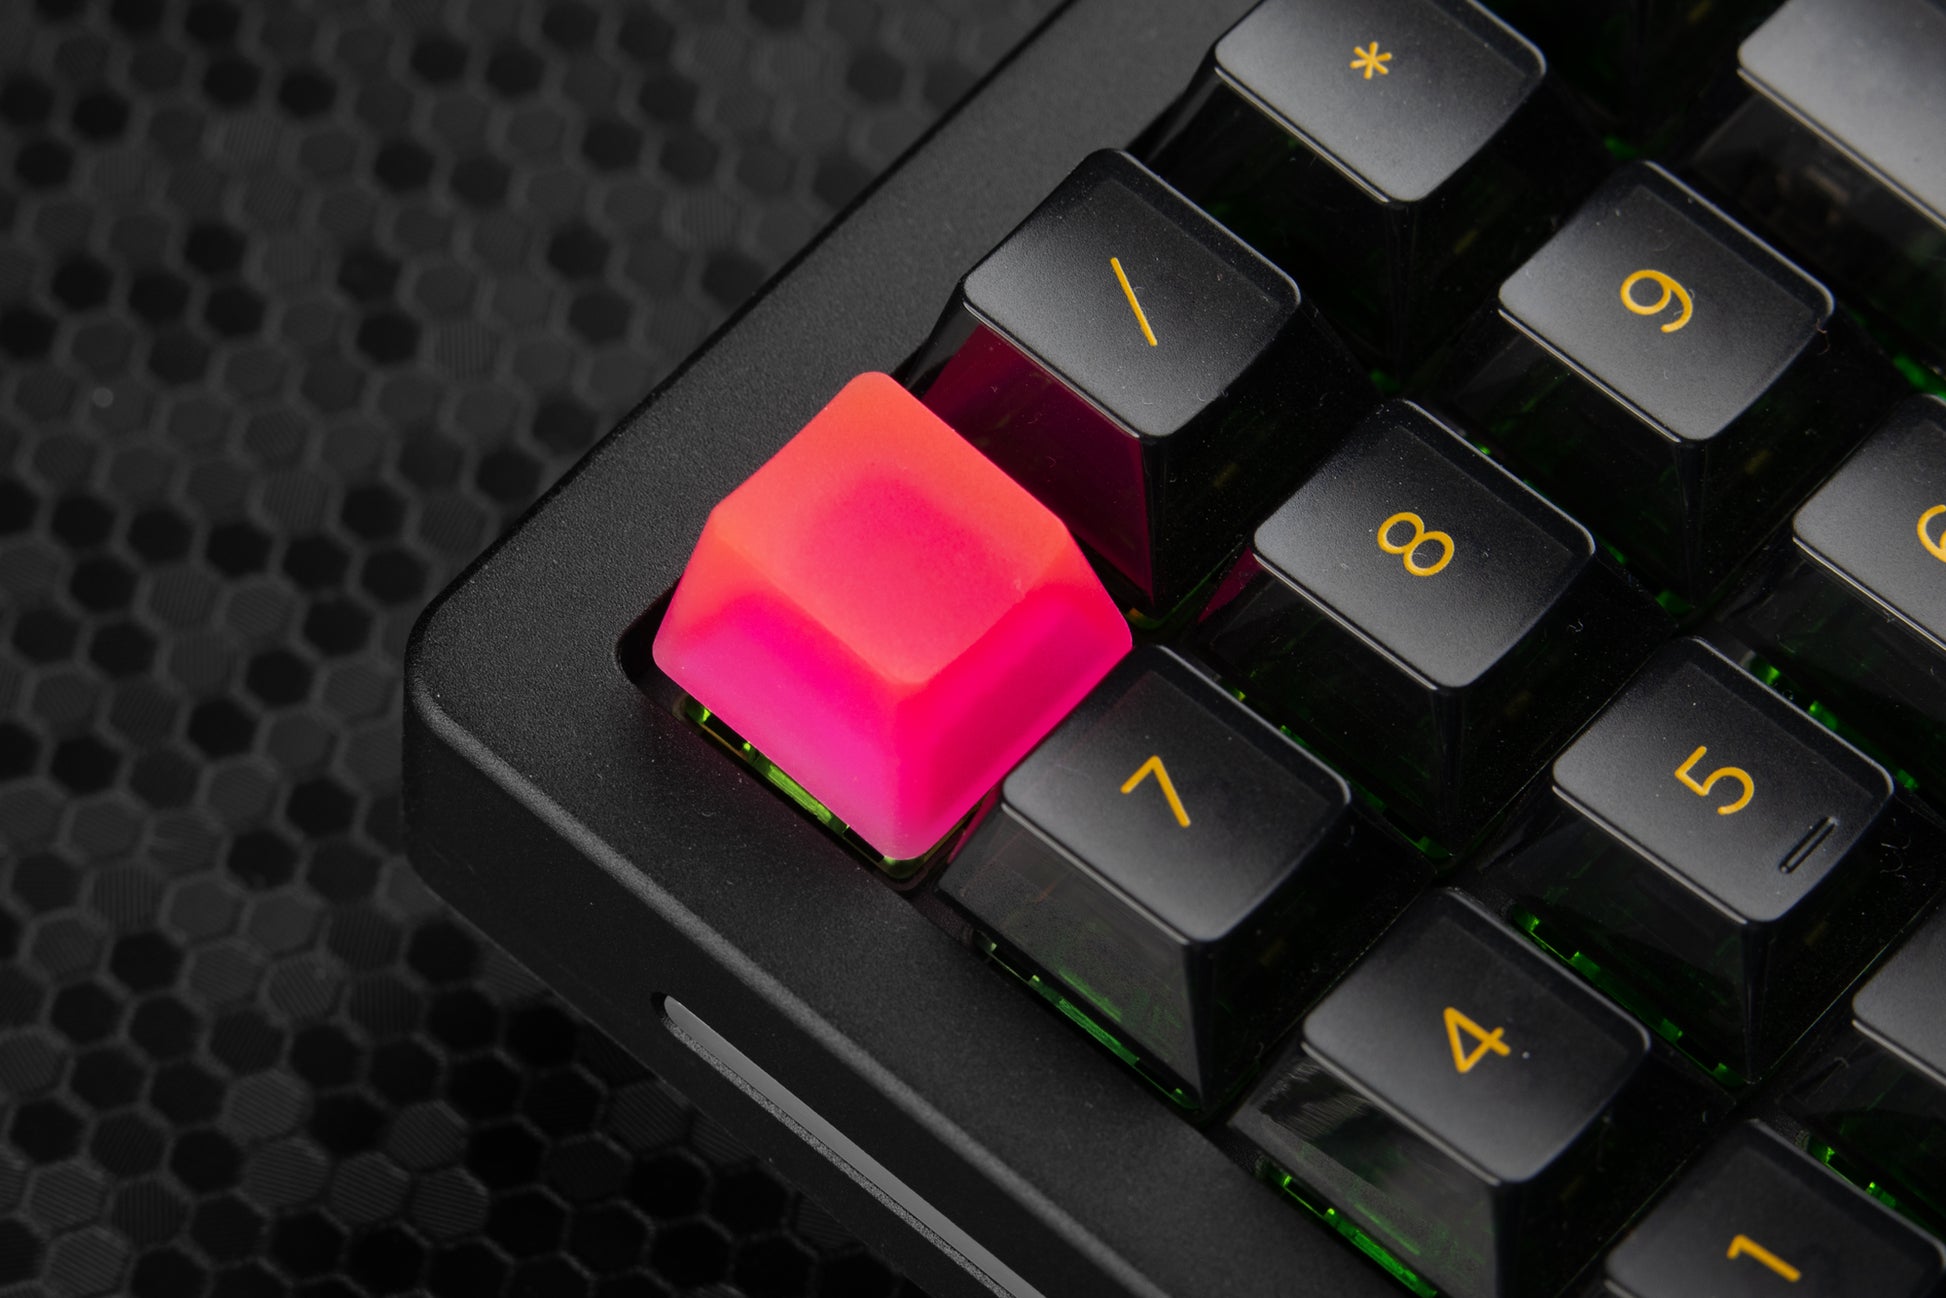 Transparent neon pink artisan keycap installed on a numpad